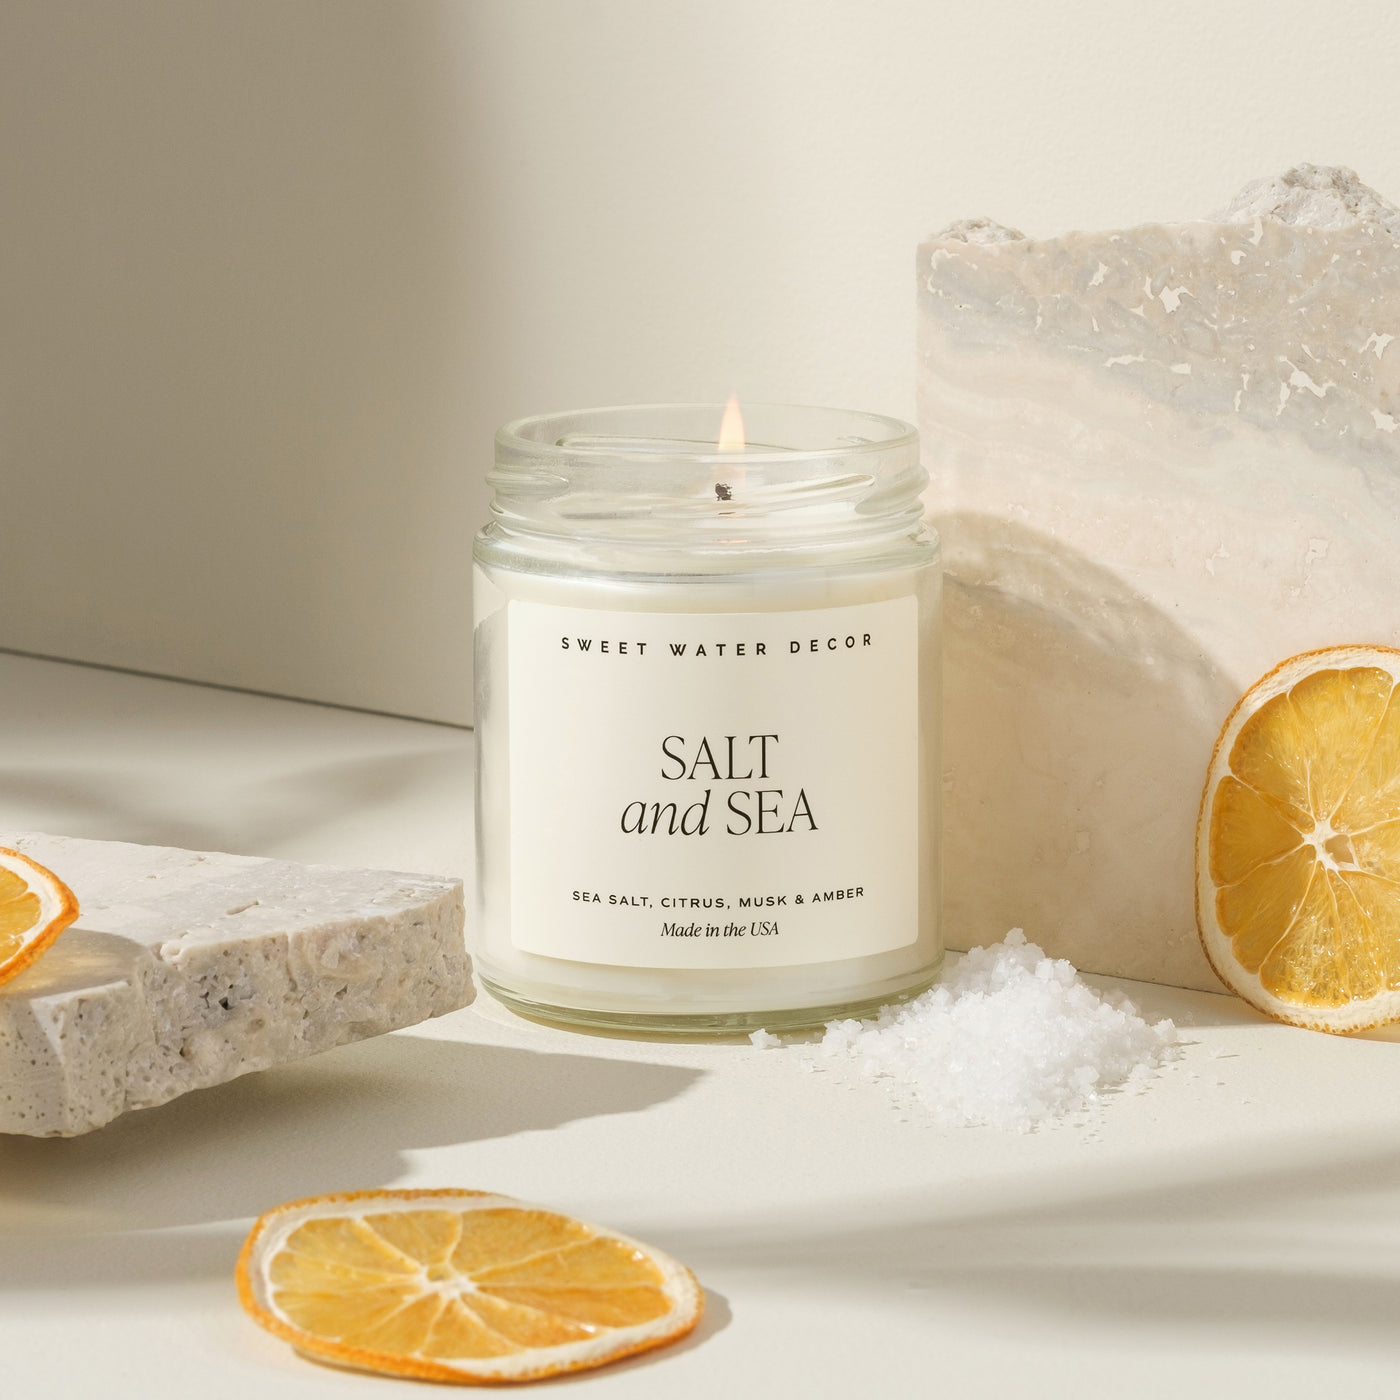 Salt and Sea Soy Candle - Clear Jar - 9 oz